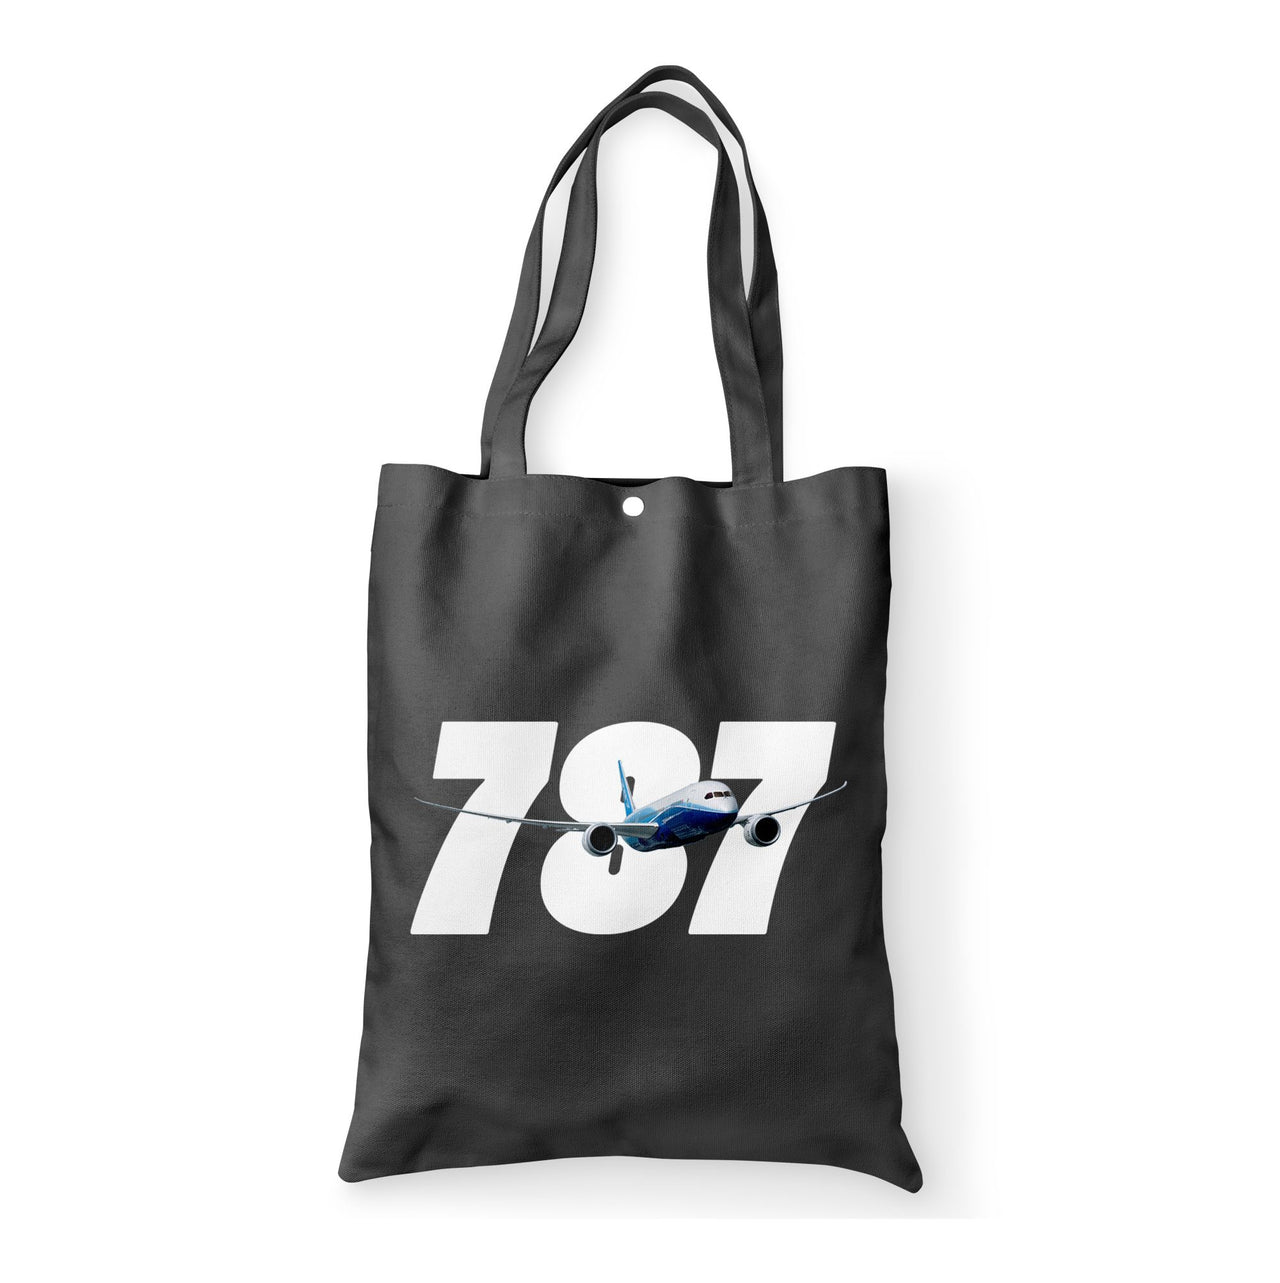 Super Boeing 787 Designed Tote Bags